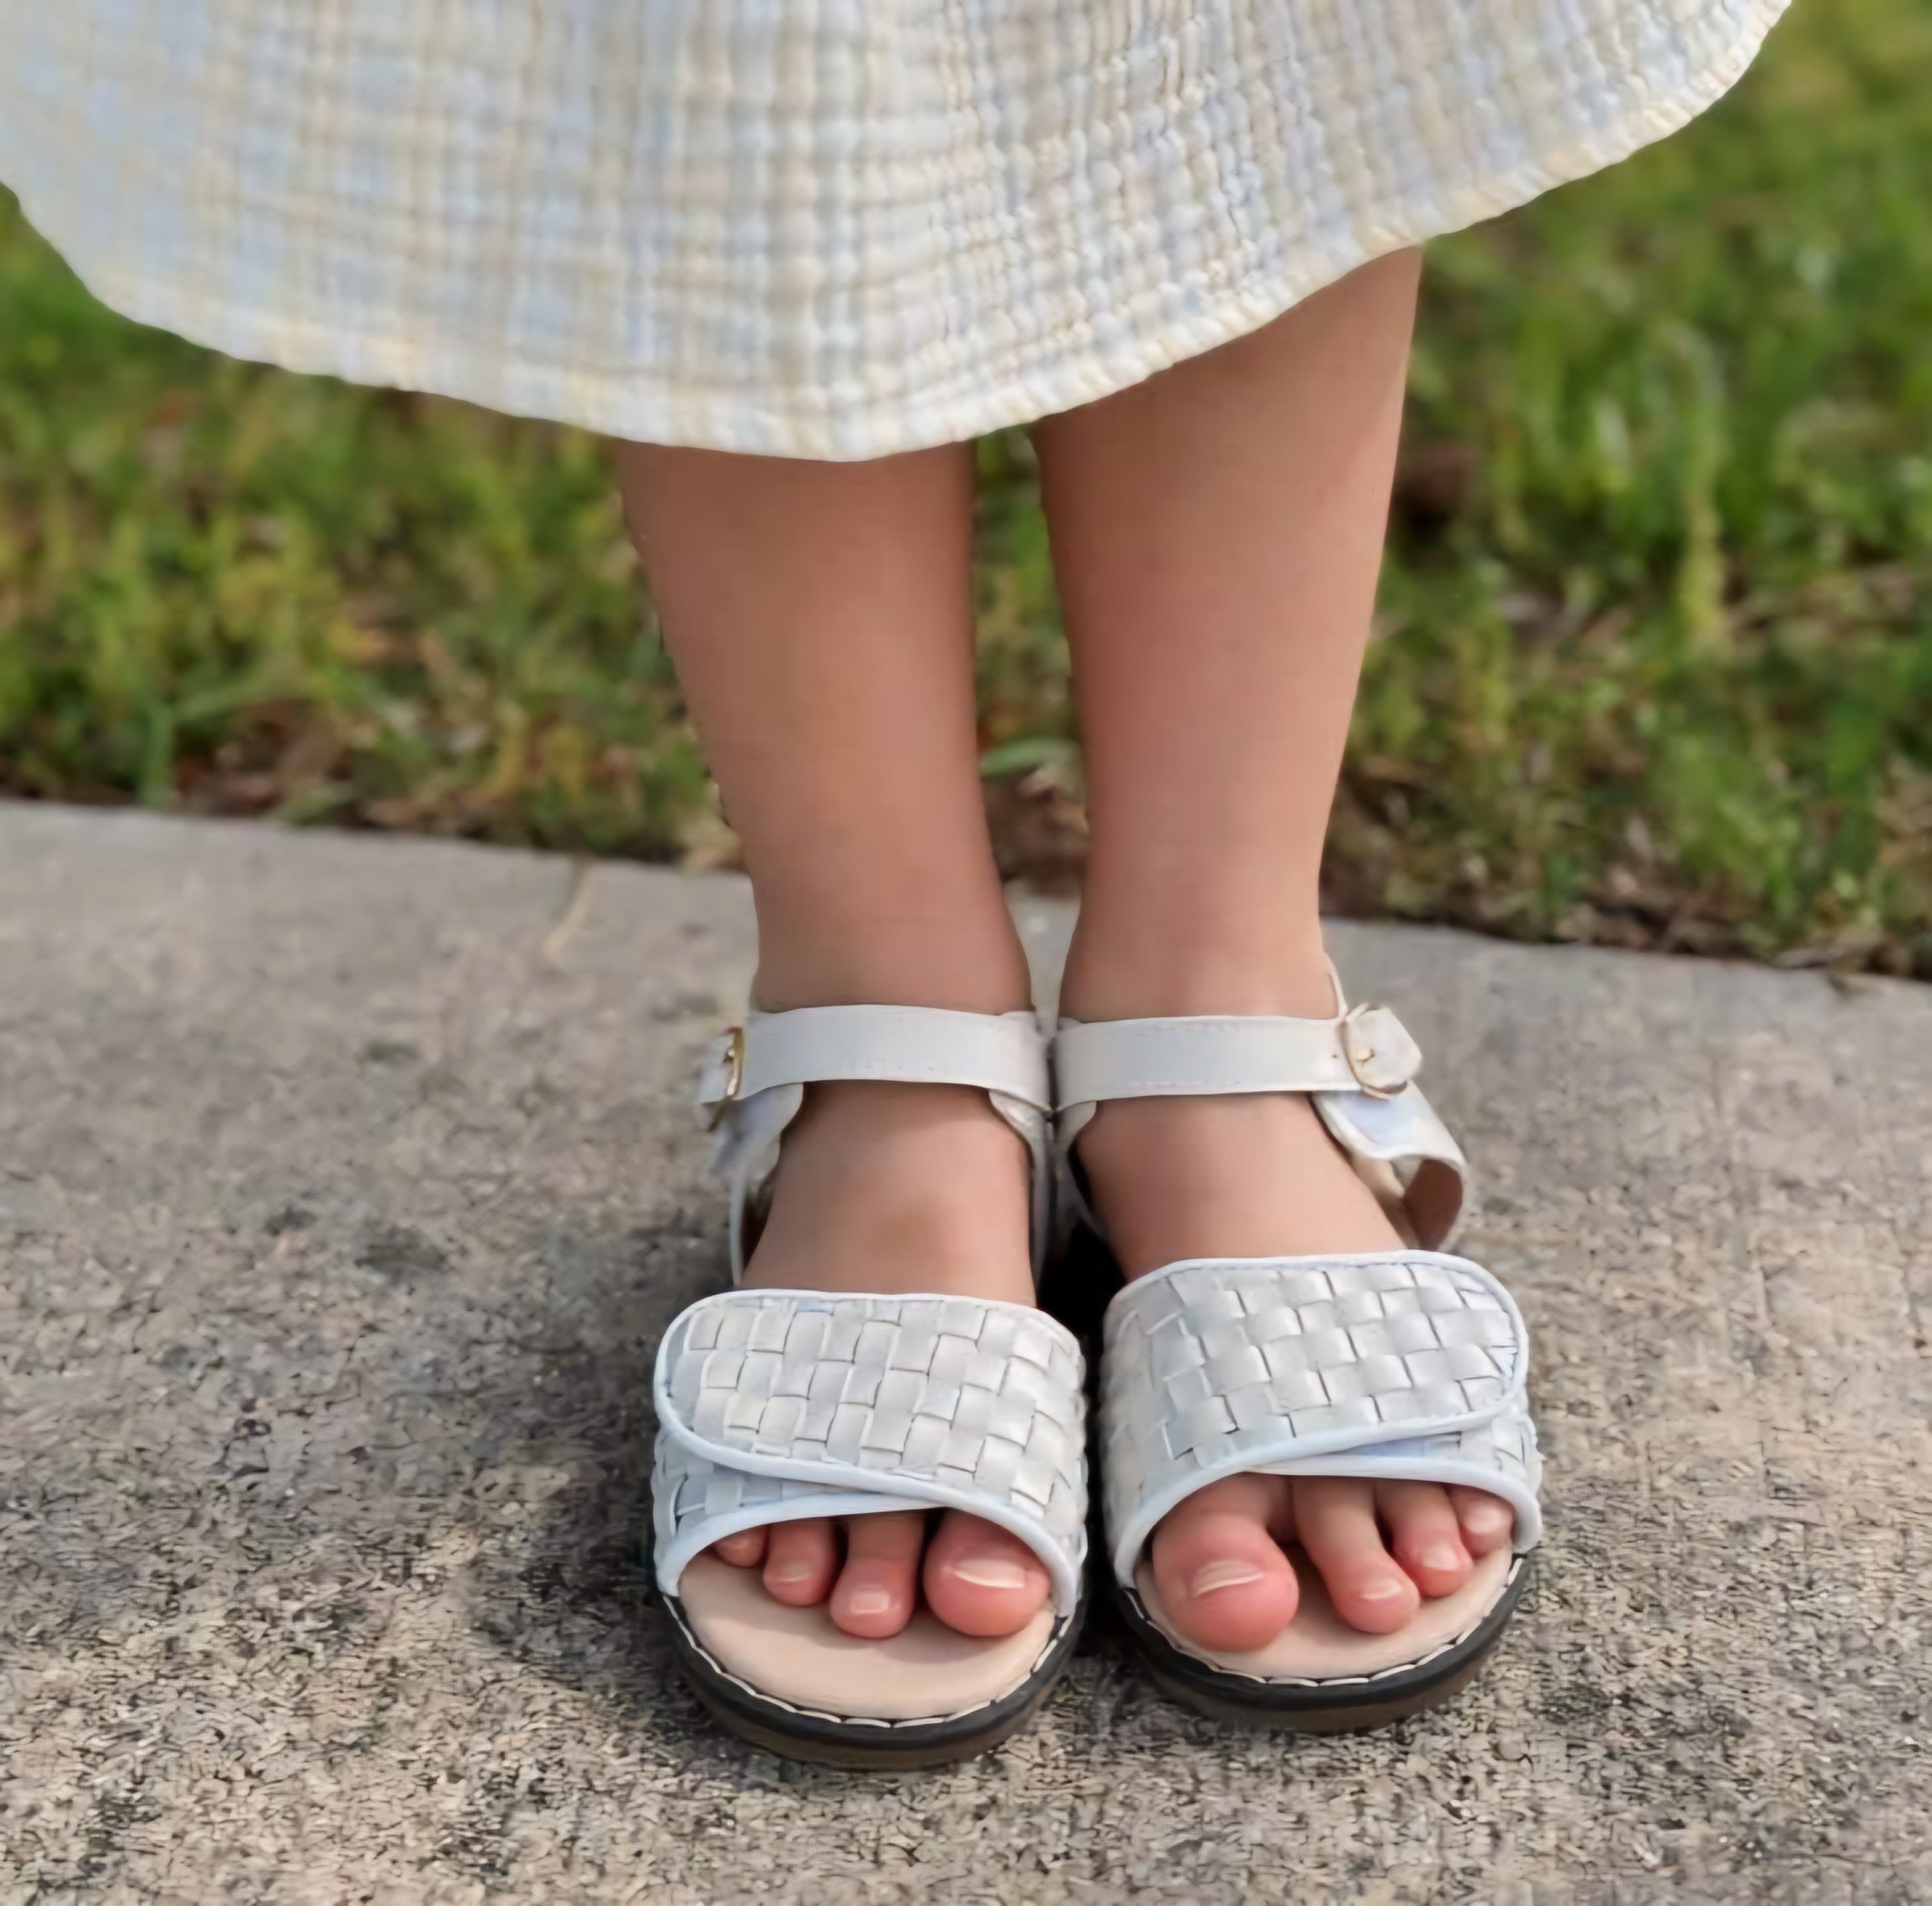 COLLINS Children's Sandal in Cream